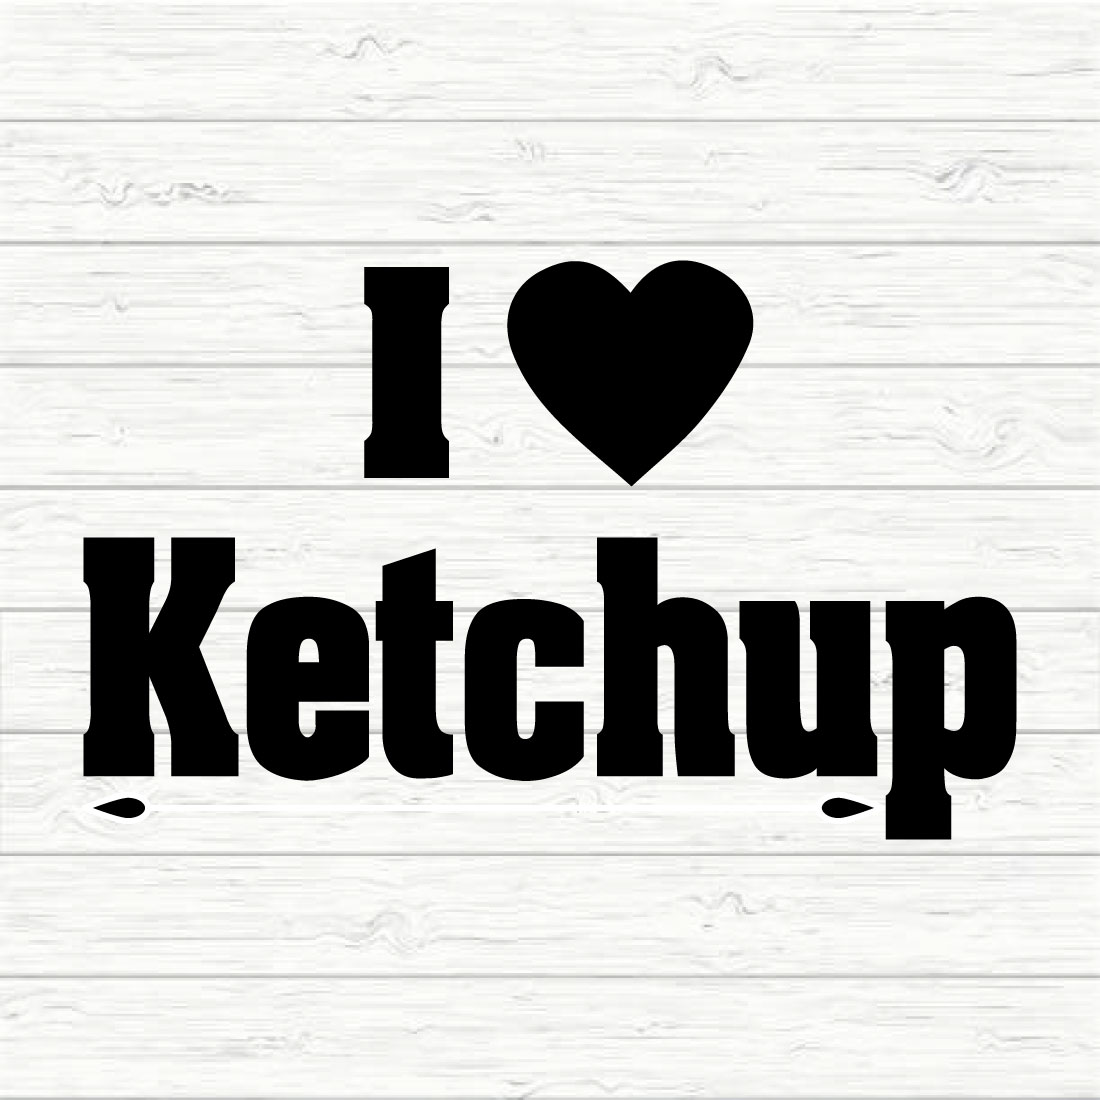 I Love Ketchup preview image.